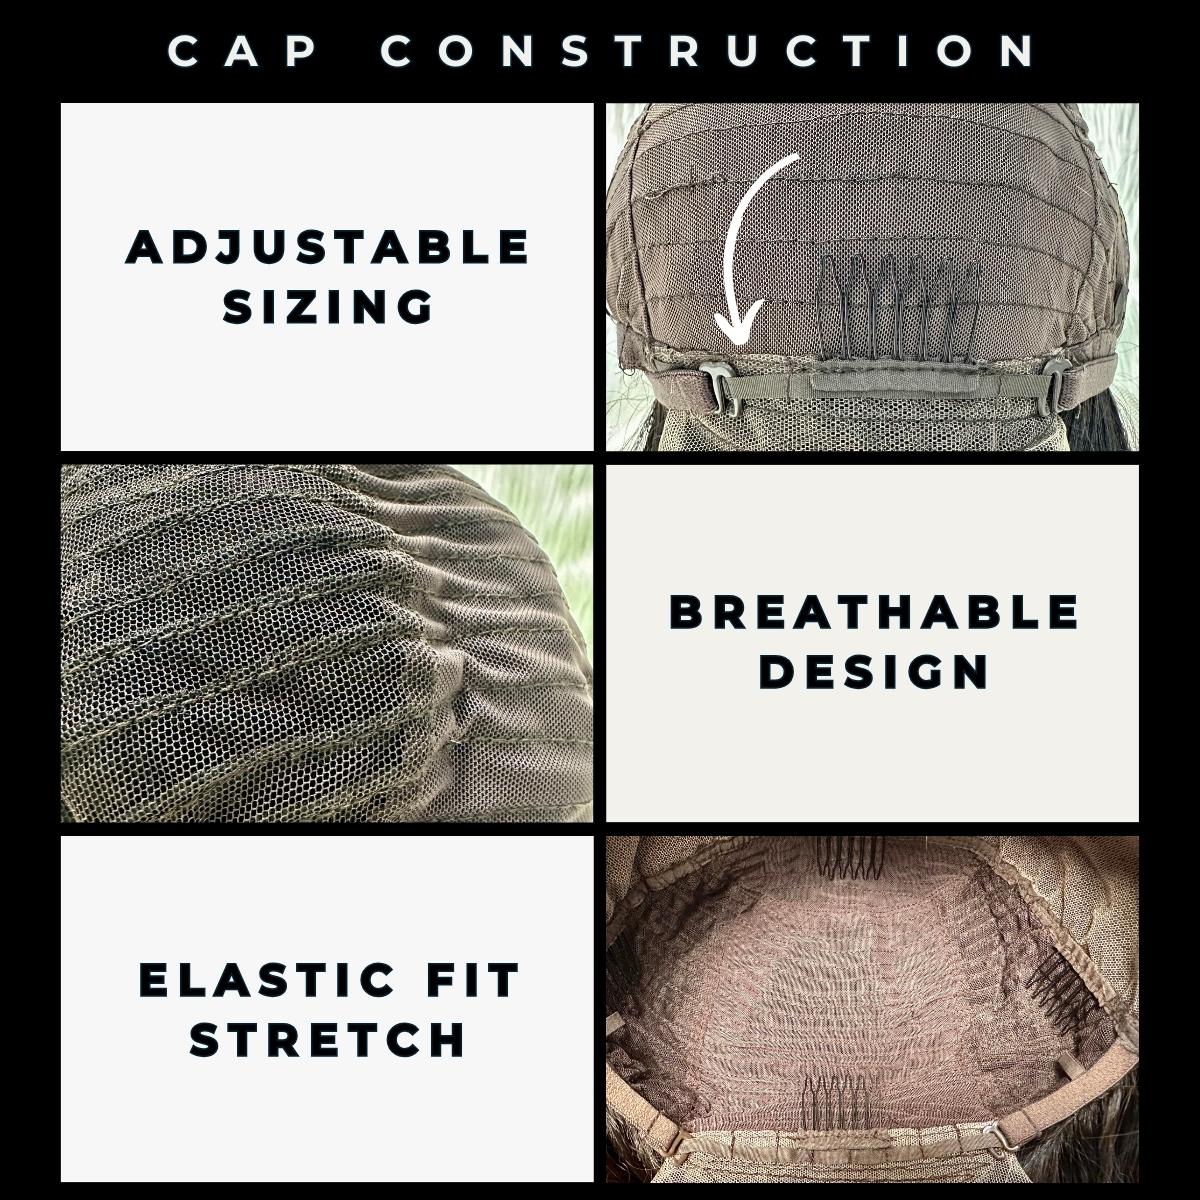 cap contruction-adjustable sizing-elastic stretch